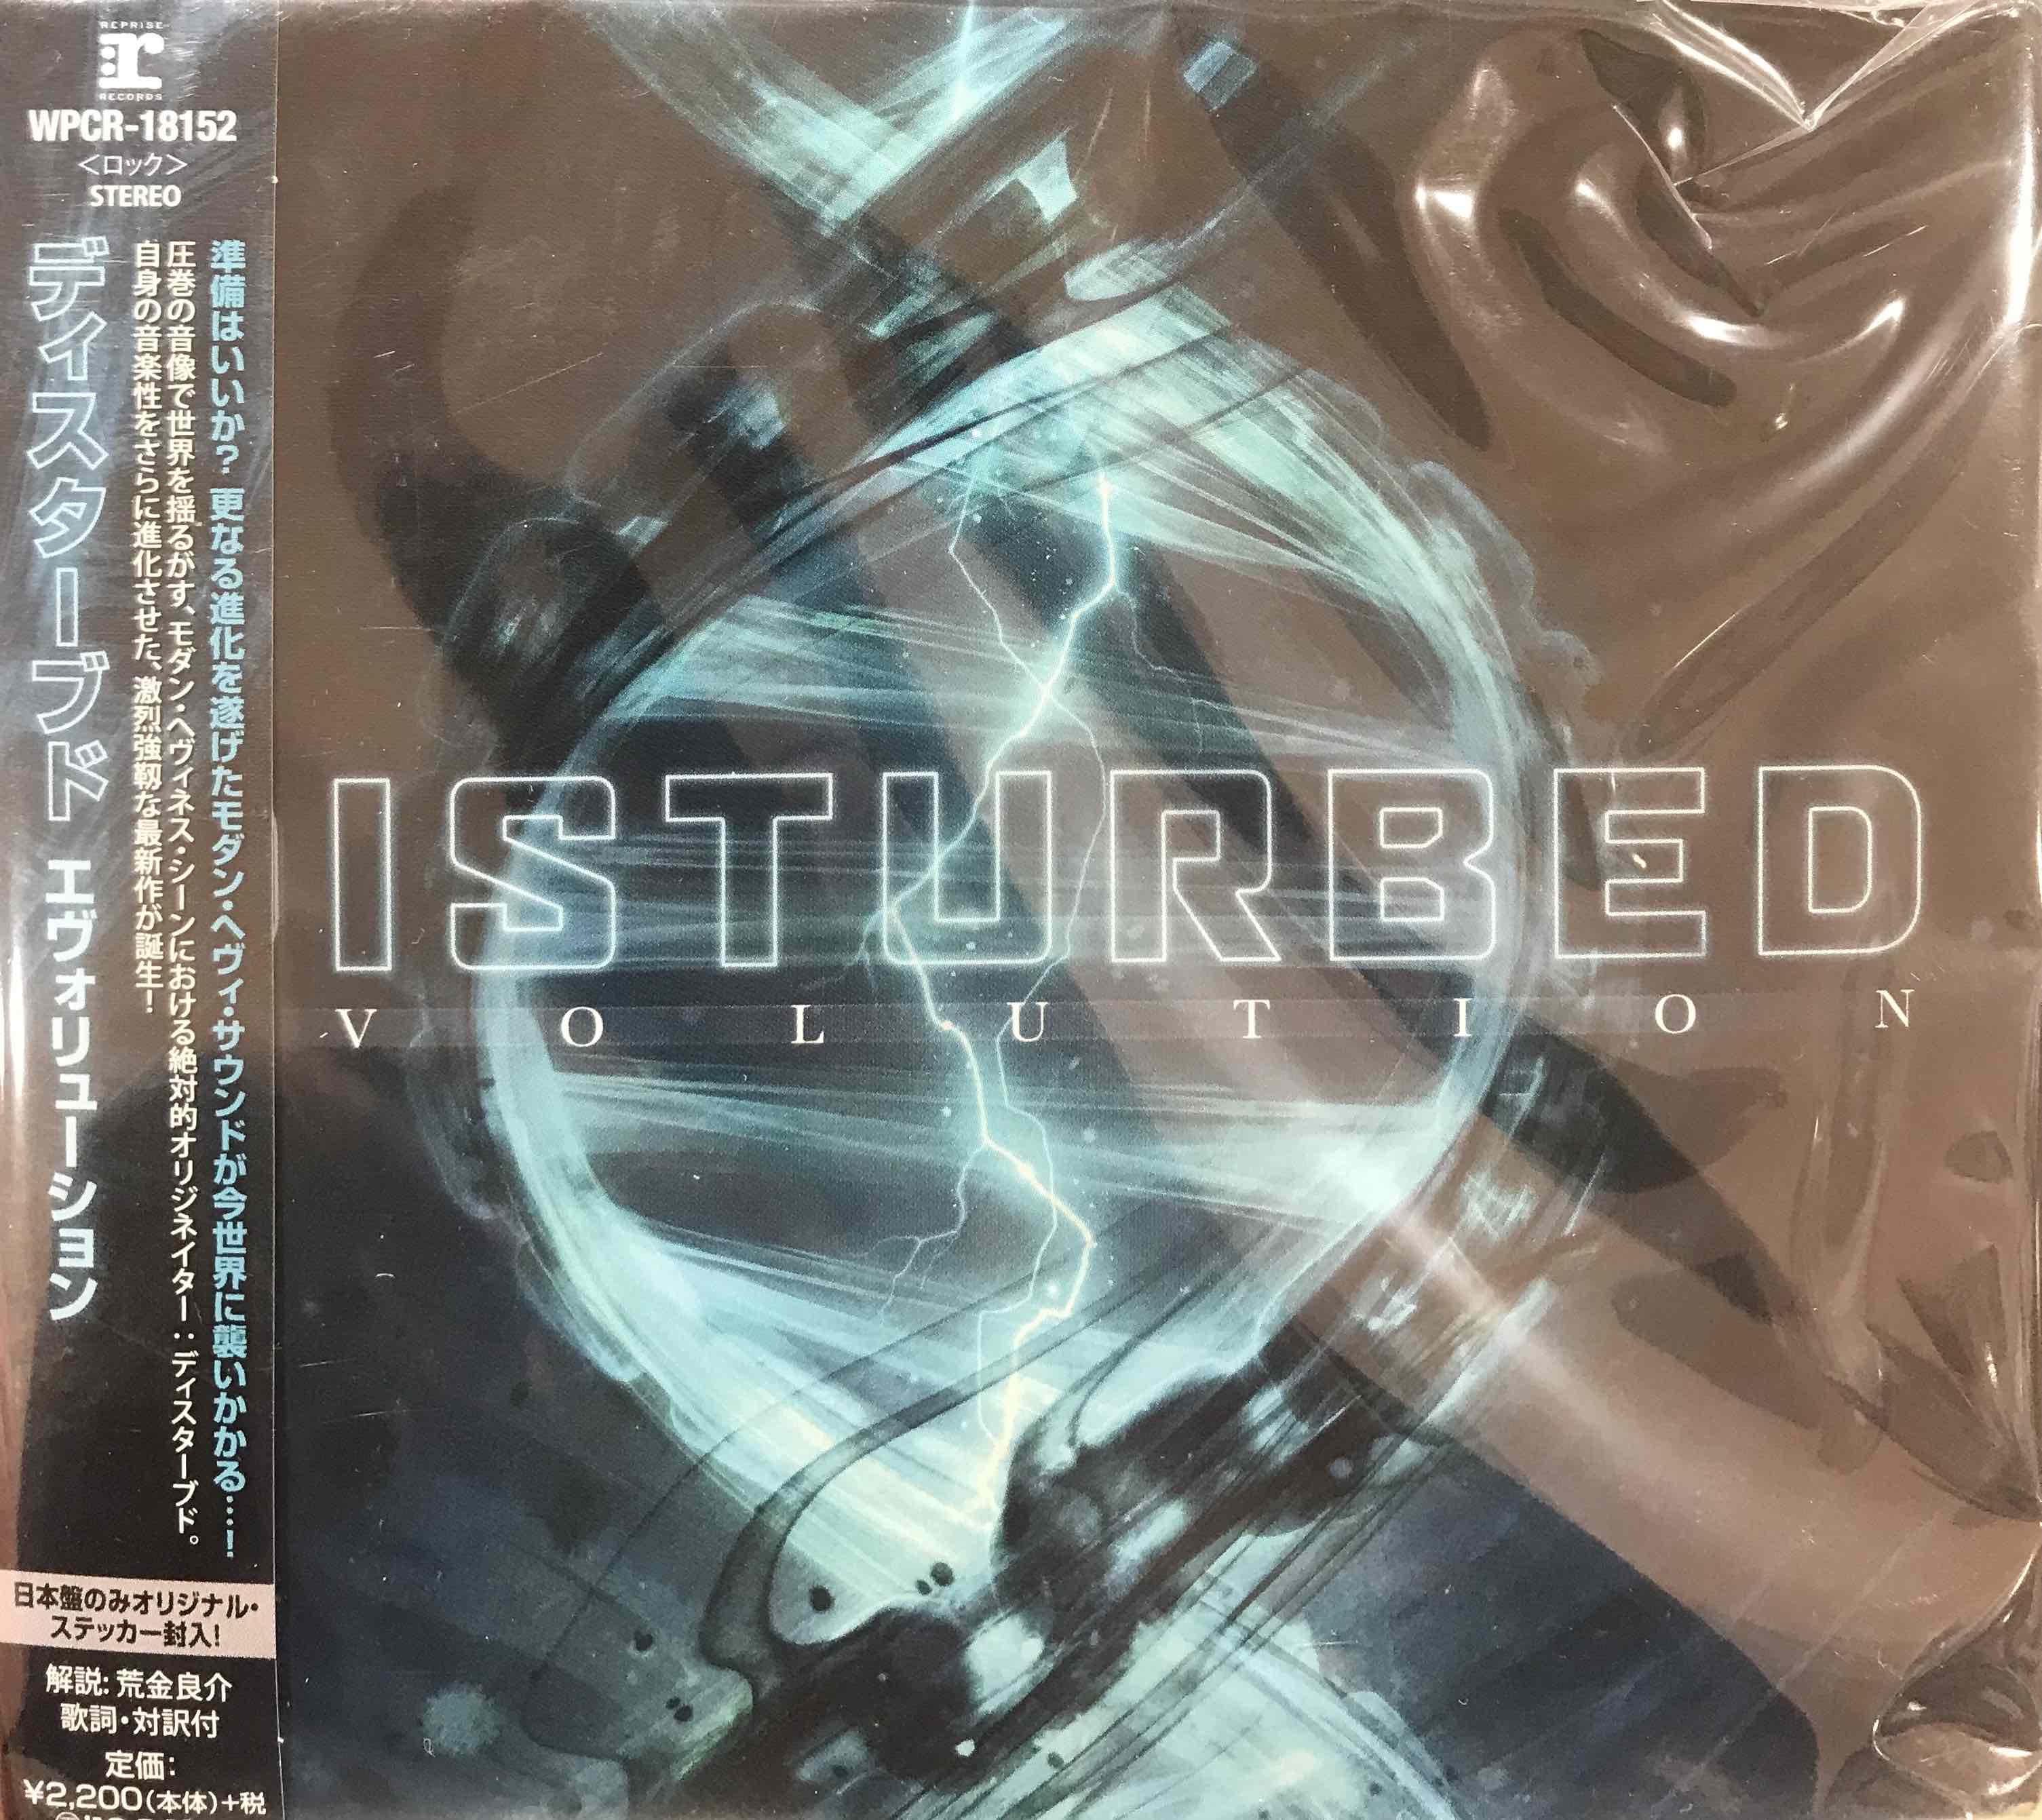 Disturbed ‎– Evolution